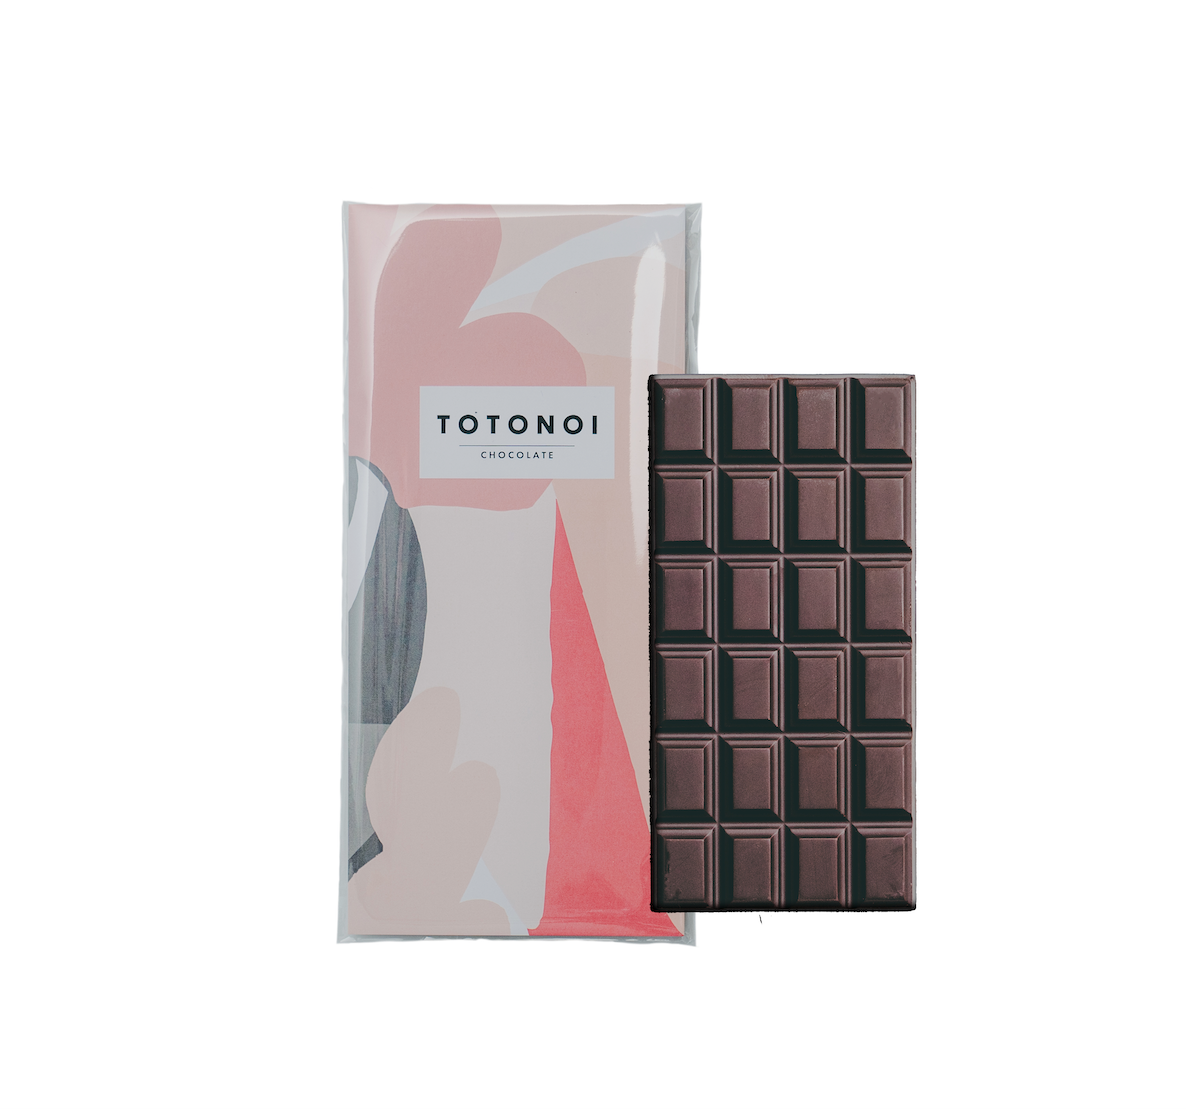 AMAZONチョコレートミニバー　TOTONOI Chocolate-AMAZON CACAO